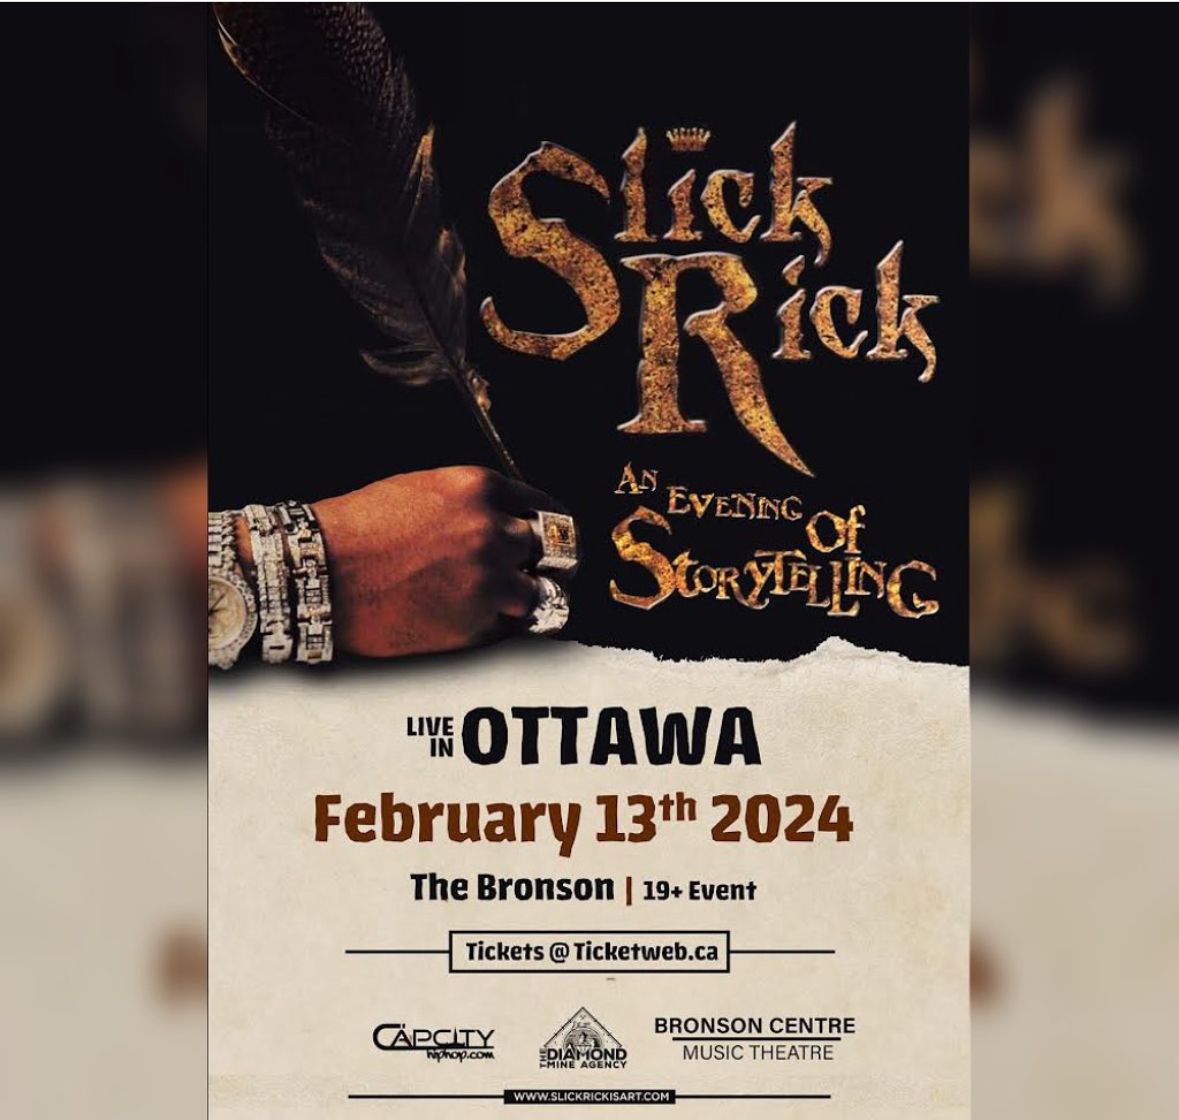 Slick Rick - An Evening Of Storytelling - Ottawa